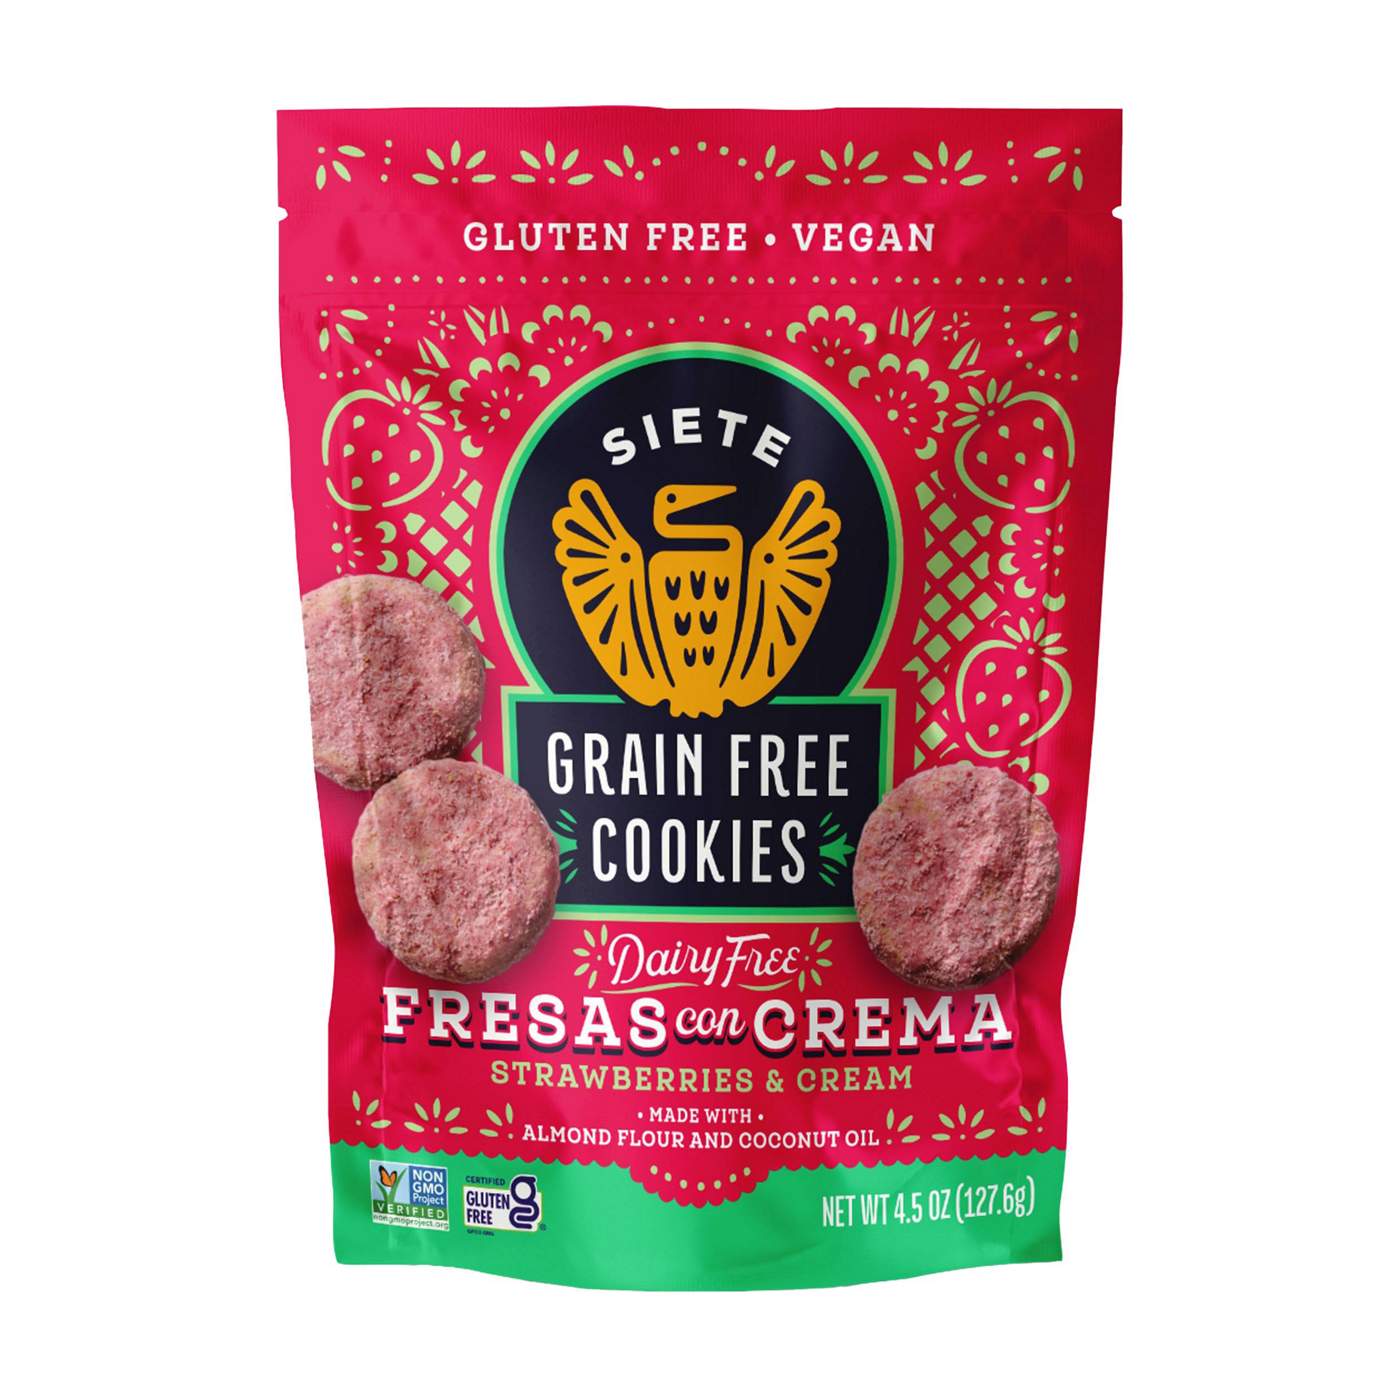 Siete Grain-Free Fresas Con Crema Cookies; image 1 of 2